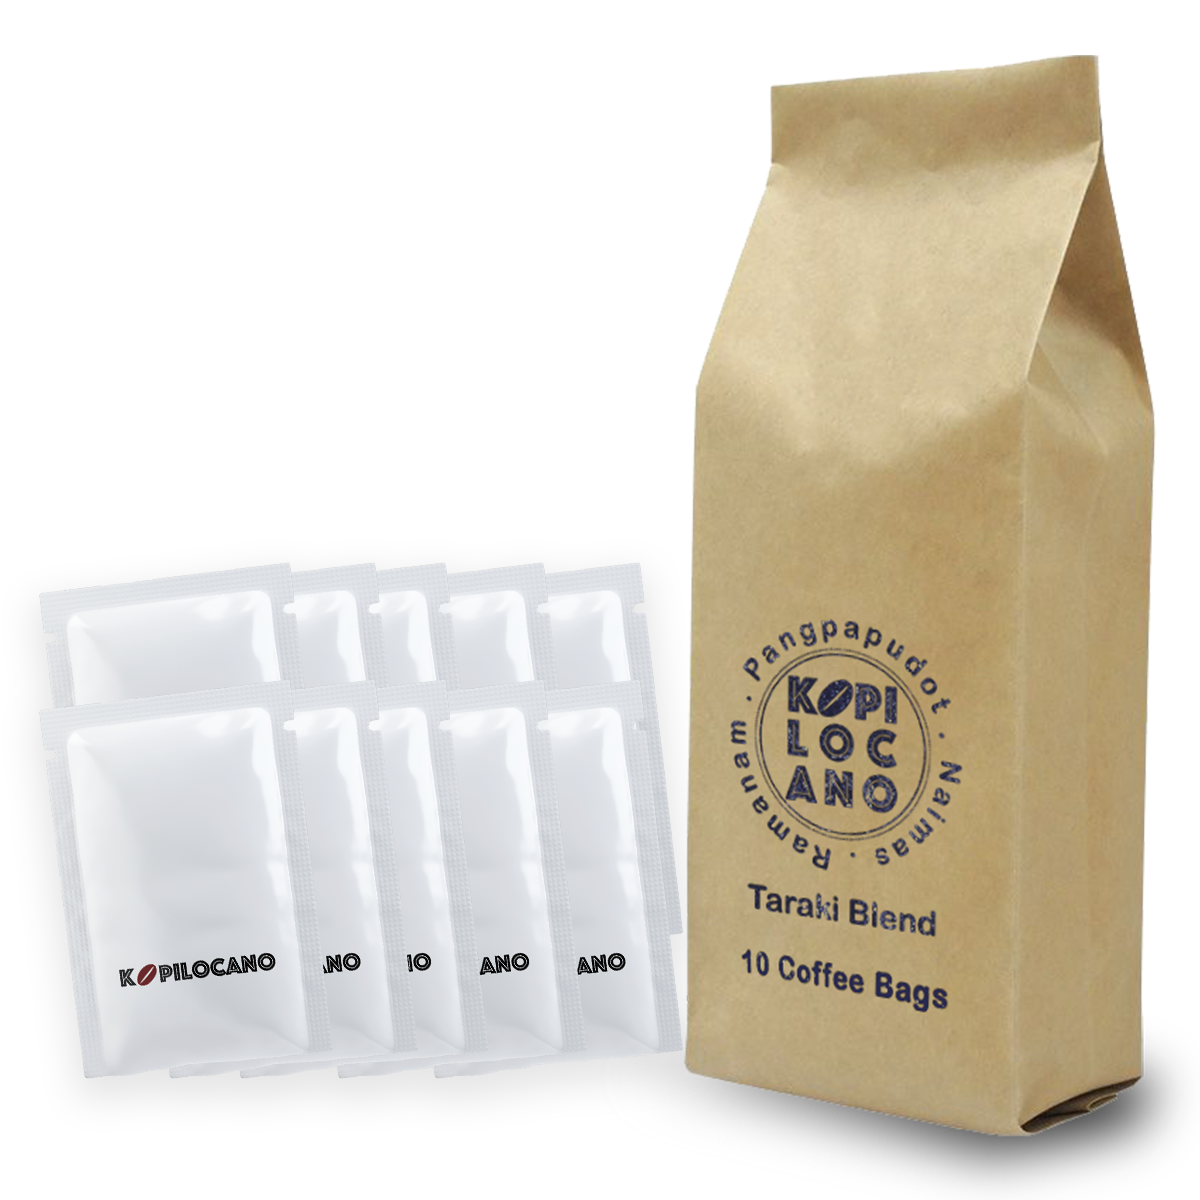 Kopilocano - Taraki Blend - Coffee Bag 10s - The Roasted Ground